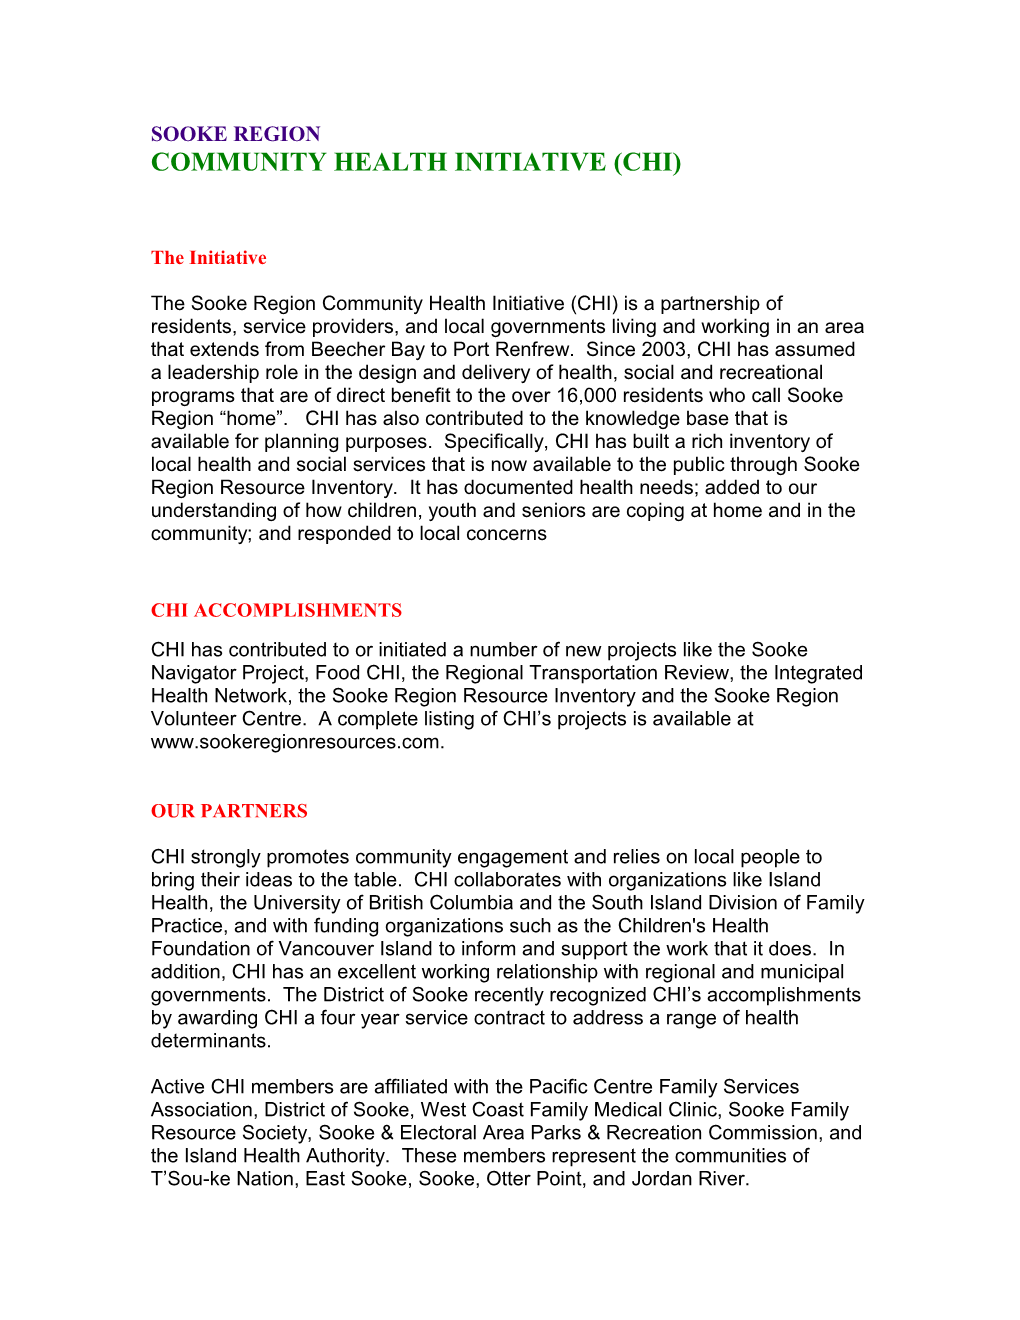 Community Health Initiative (Chi)